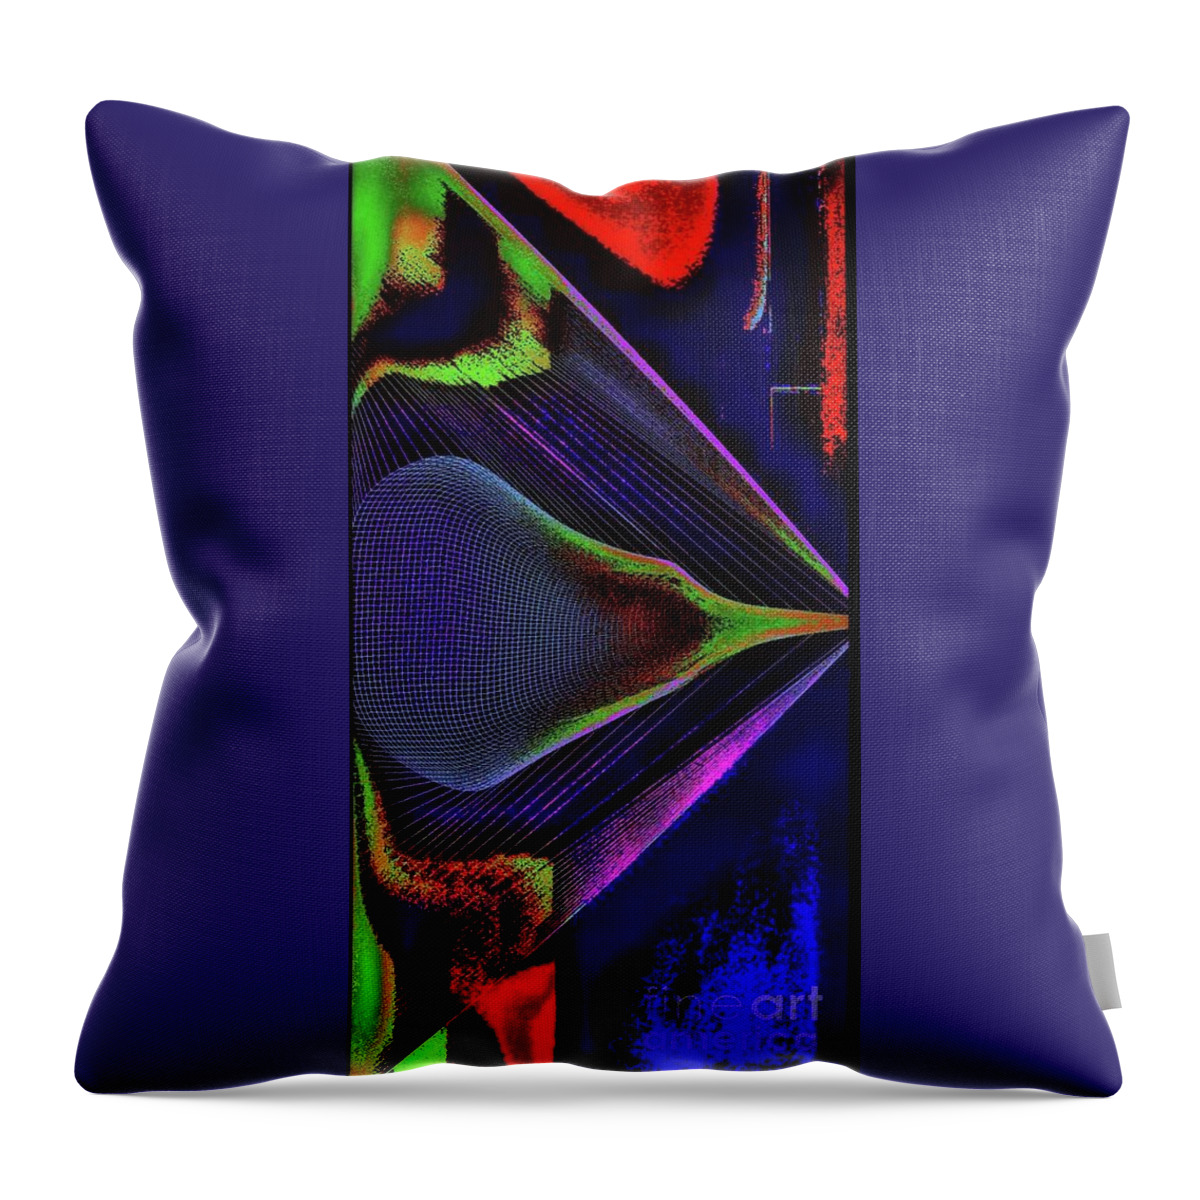  Throw Pillow featuring the digital art Pinpoint 2 by Glenn Hernandez